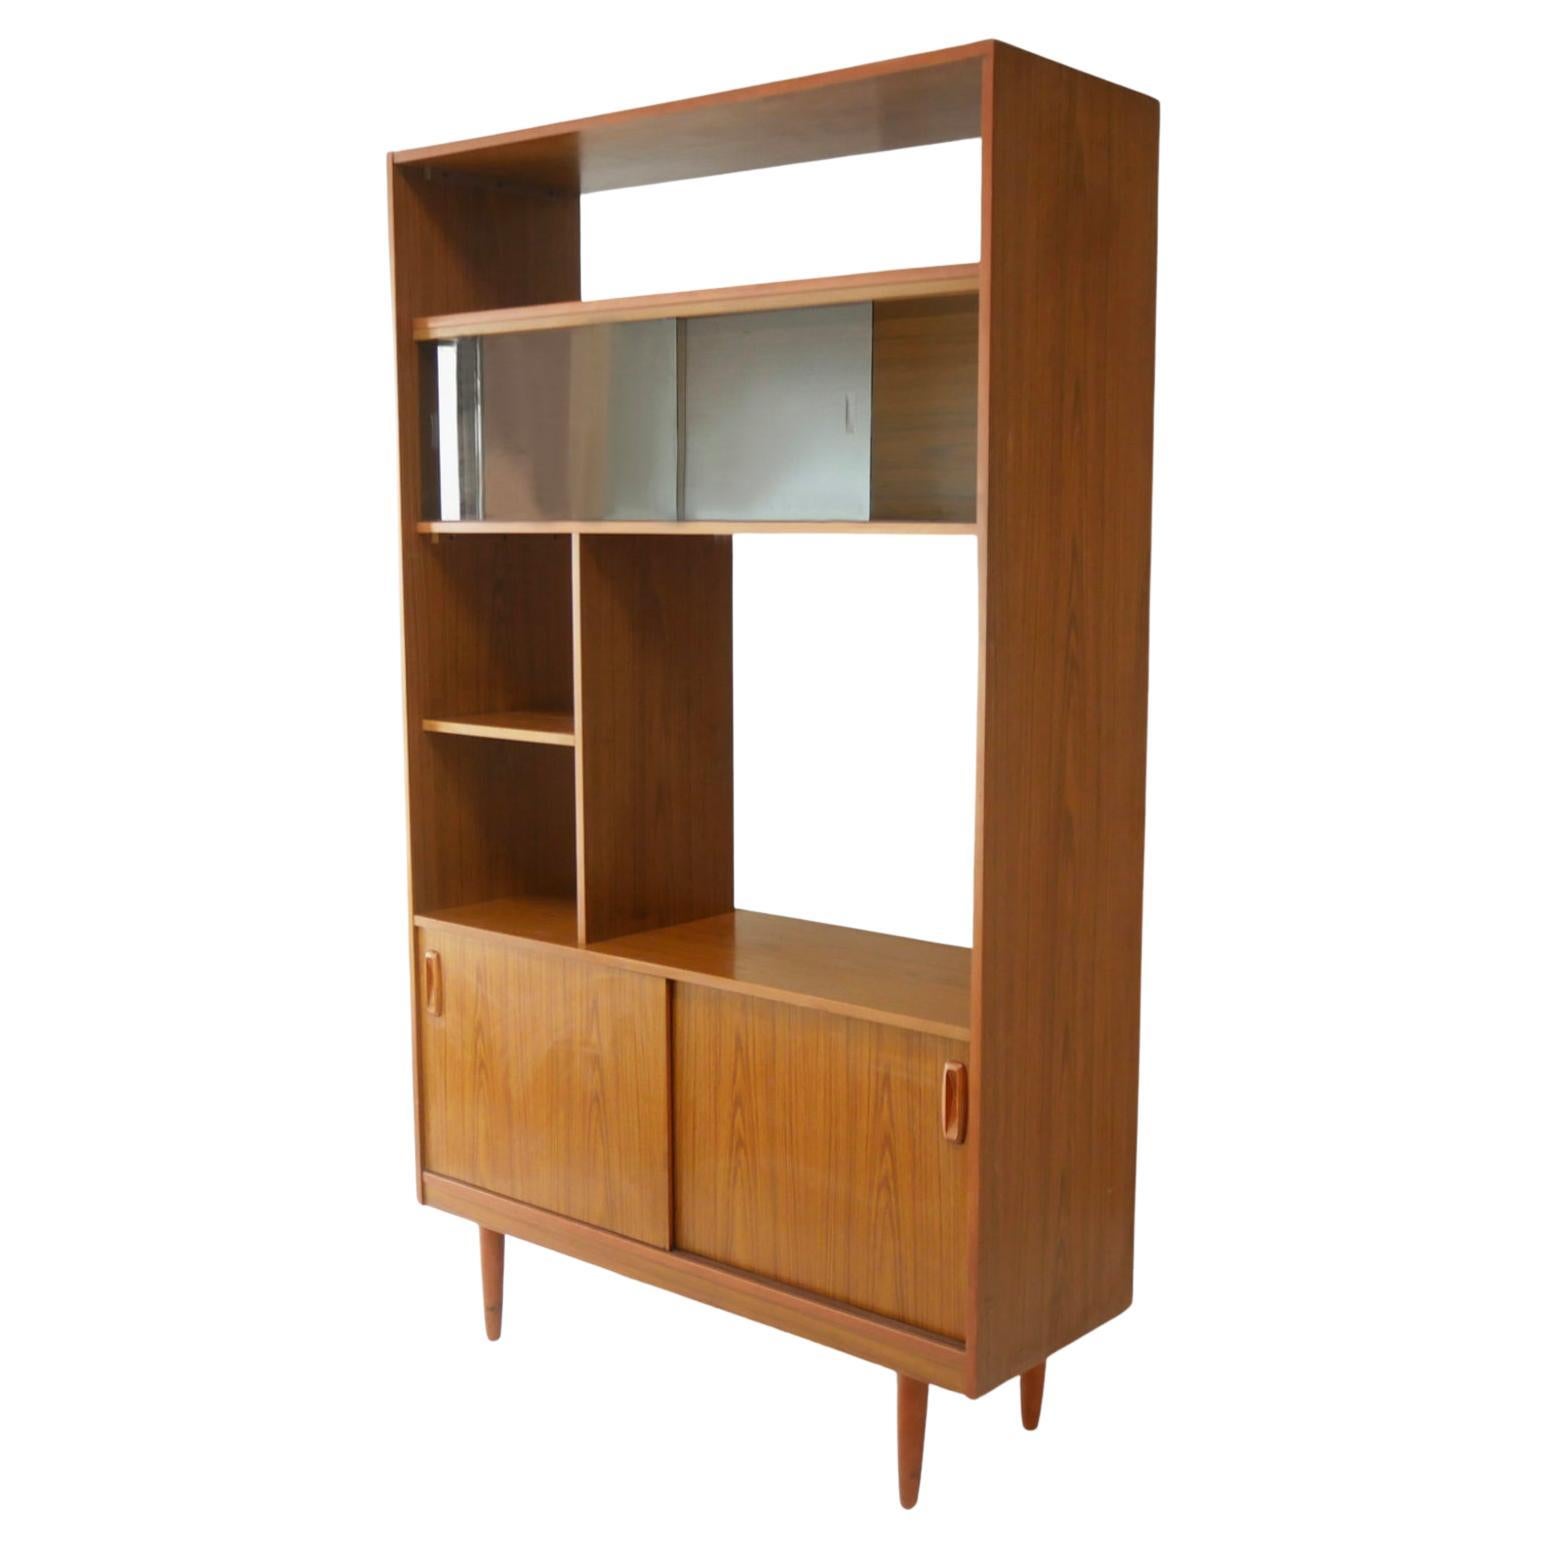 1970s mid century shelf unit / room divider by Schreiber For Sale